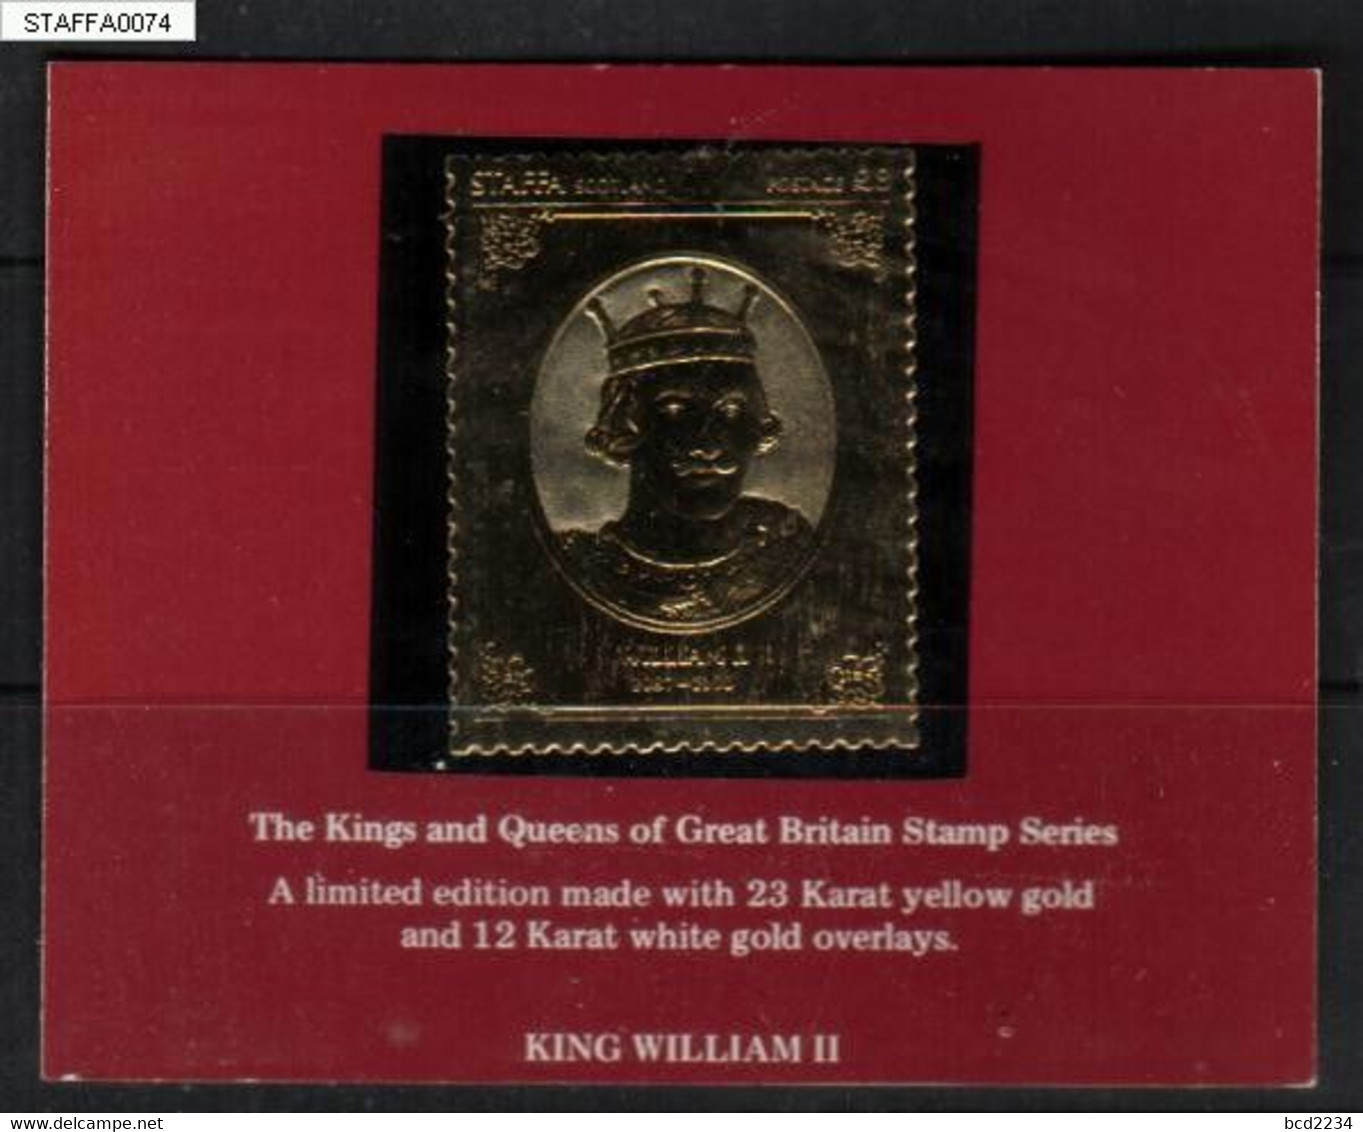 GB STAFFA £8 GOLD 23 KARAT FOIL KINGS QUEENS OF GREAT BRITAIN KING WILLIAM II LOCALS ROYALS ROYALTIES ISLAND SCOTLAND - Local Issues